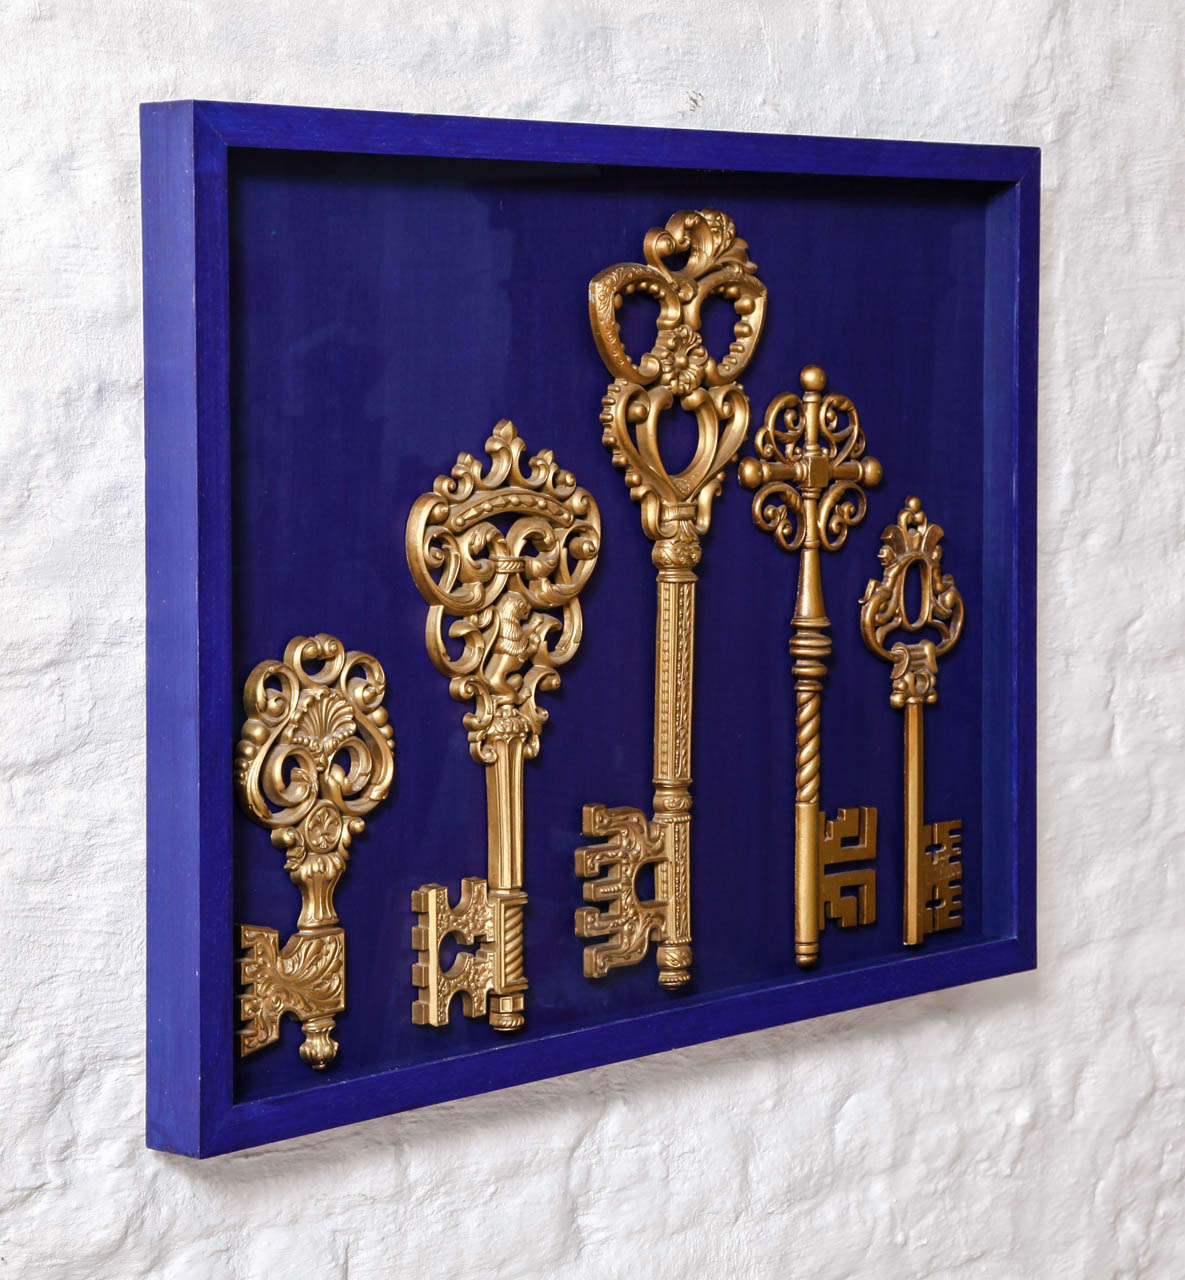 saint peter's keys of heaven,
set of five oversized metal and plastic gilded keys in a klein blue frame